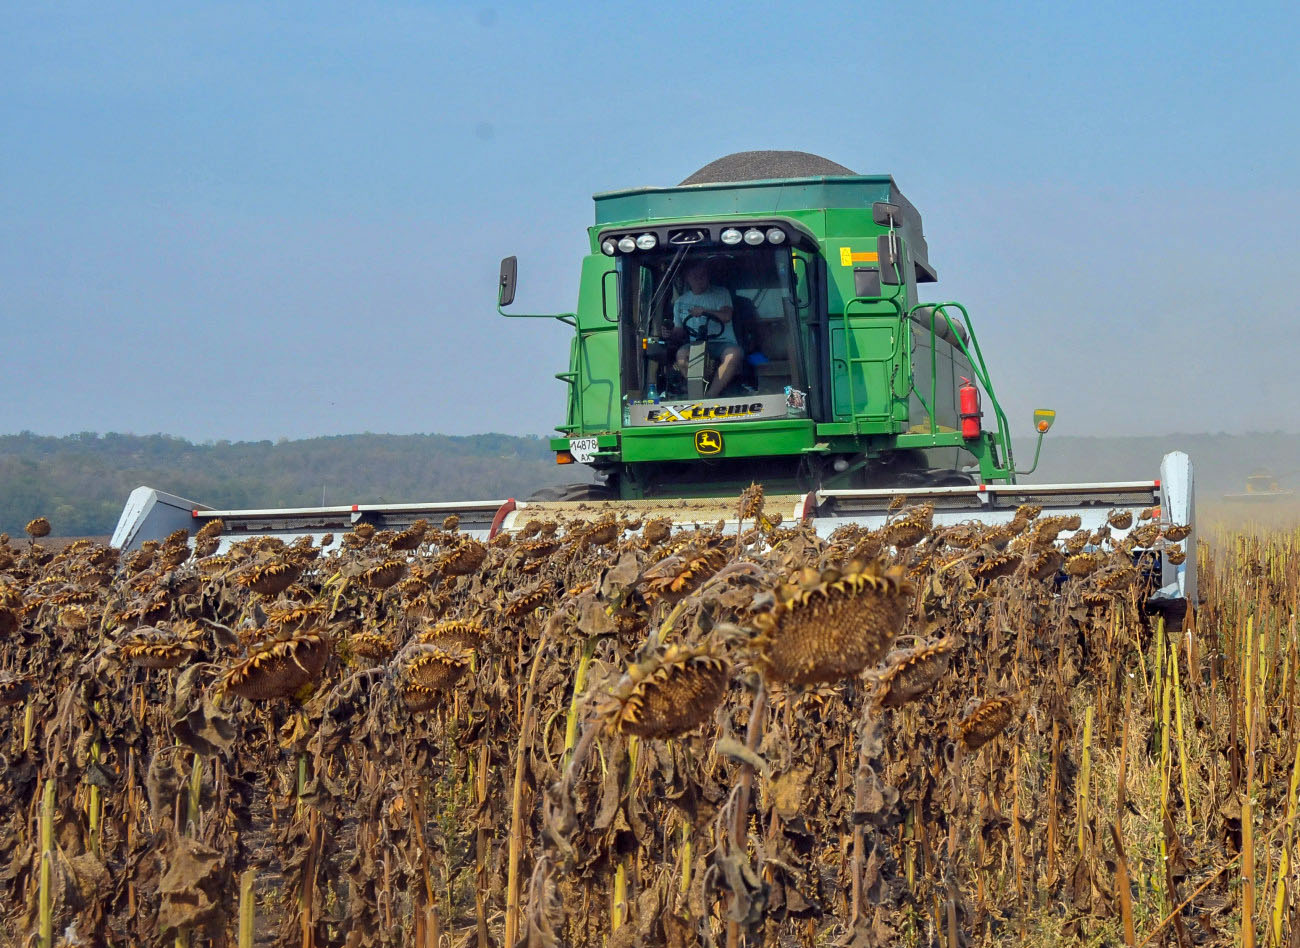 Oilseeds harvesting has started in Kazakhstan